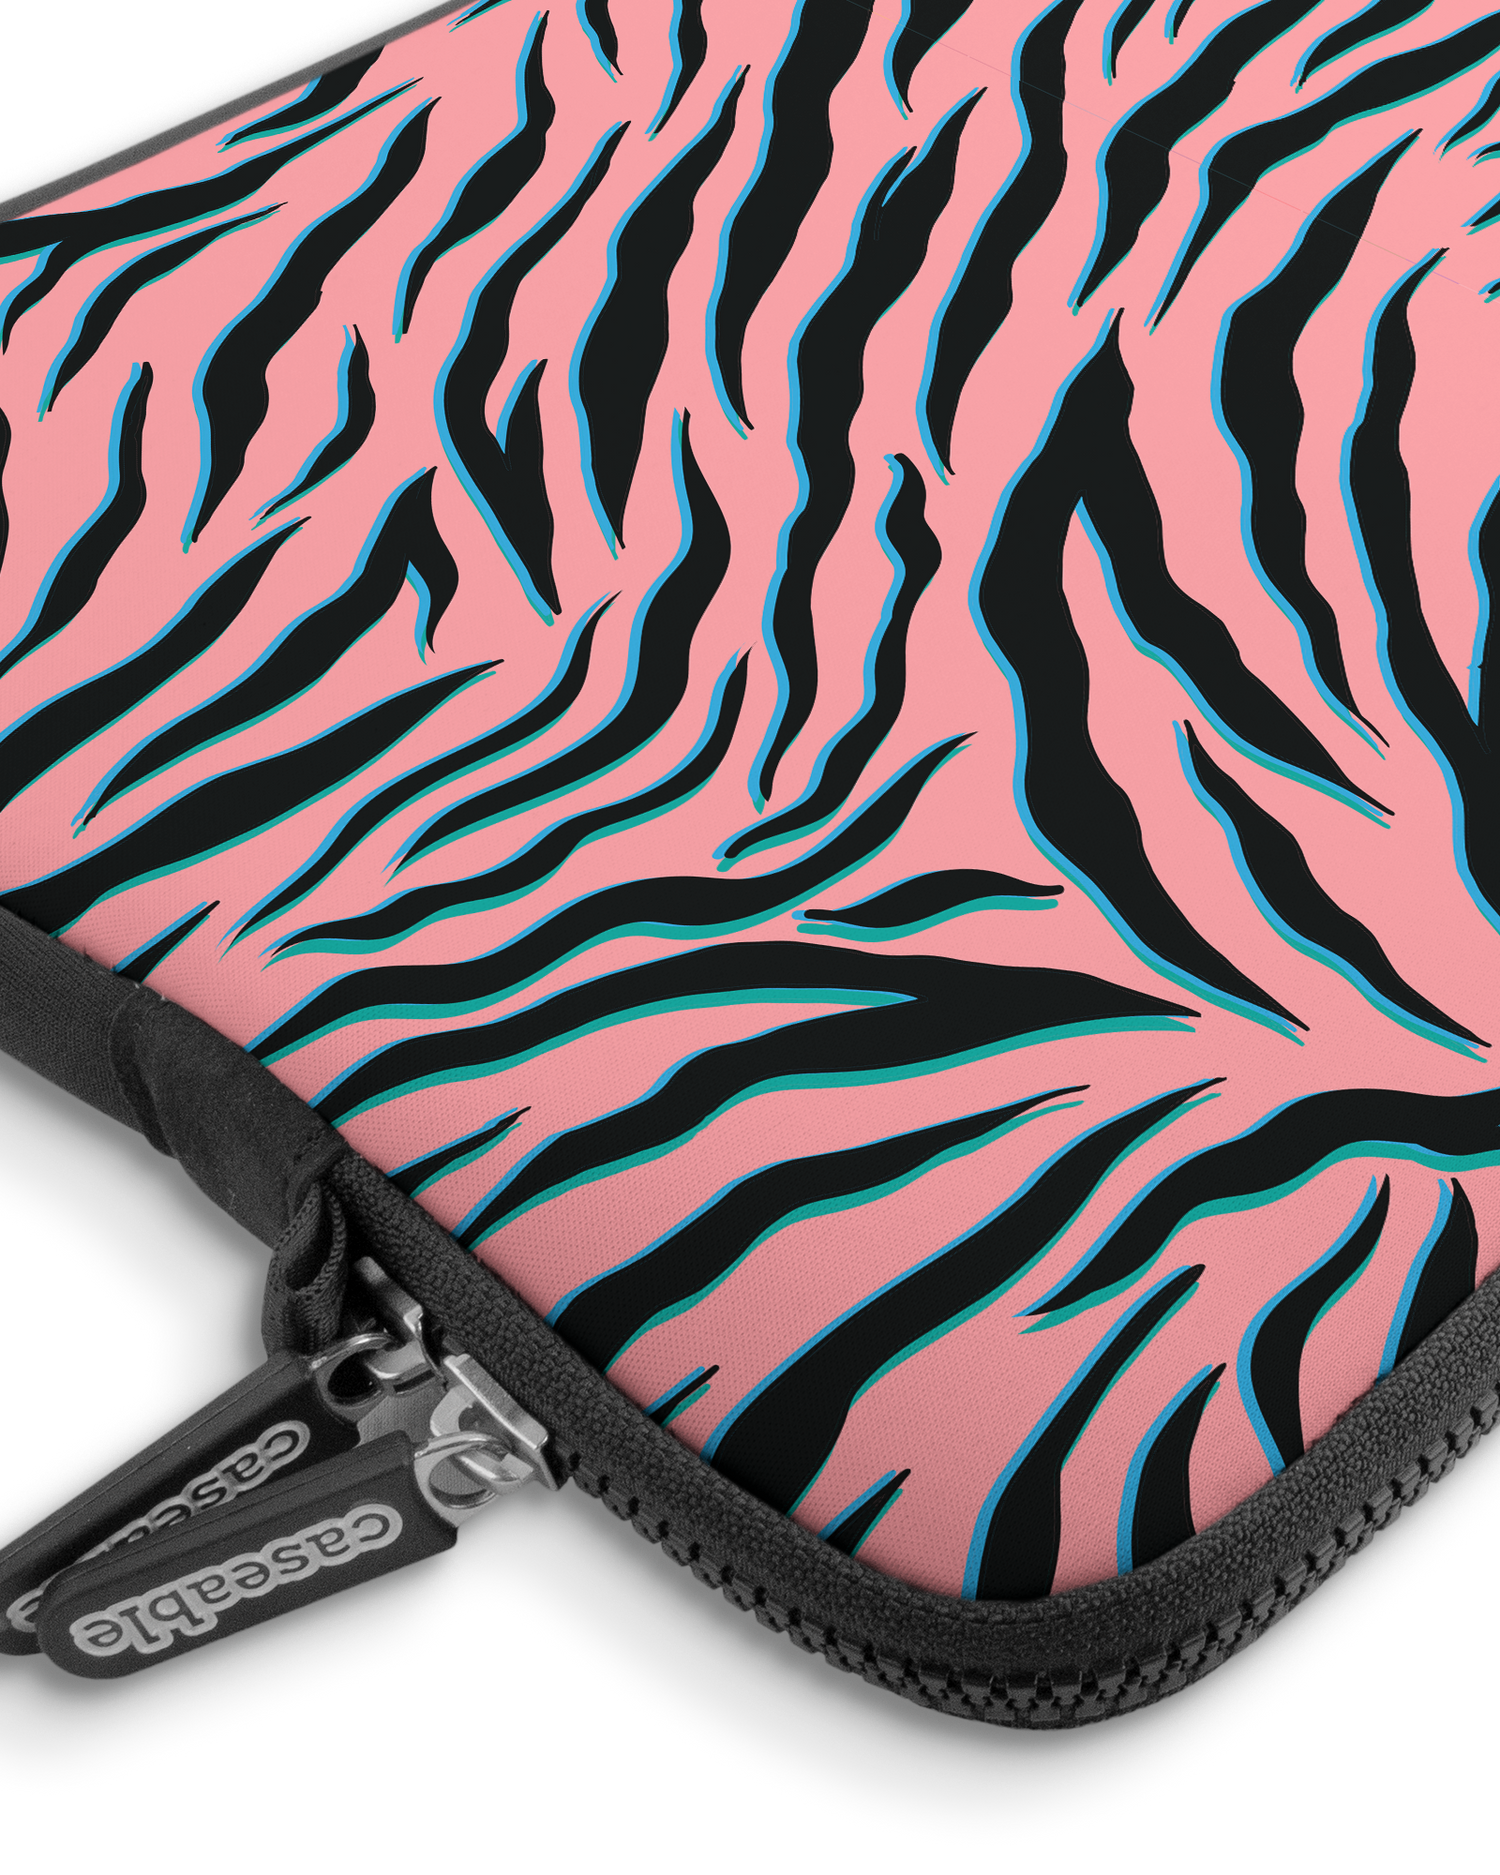 Pink Zebra Premium Laptop Bag 13-14 inch with device inside